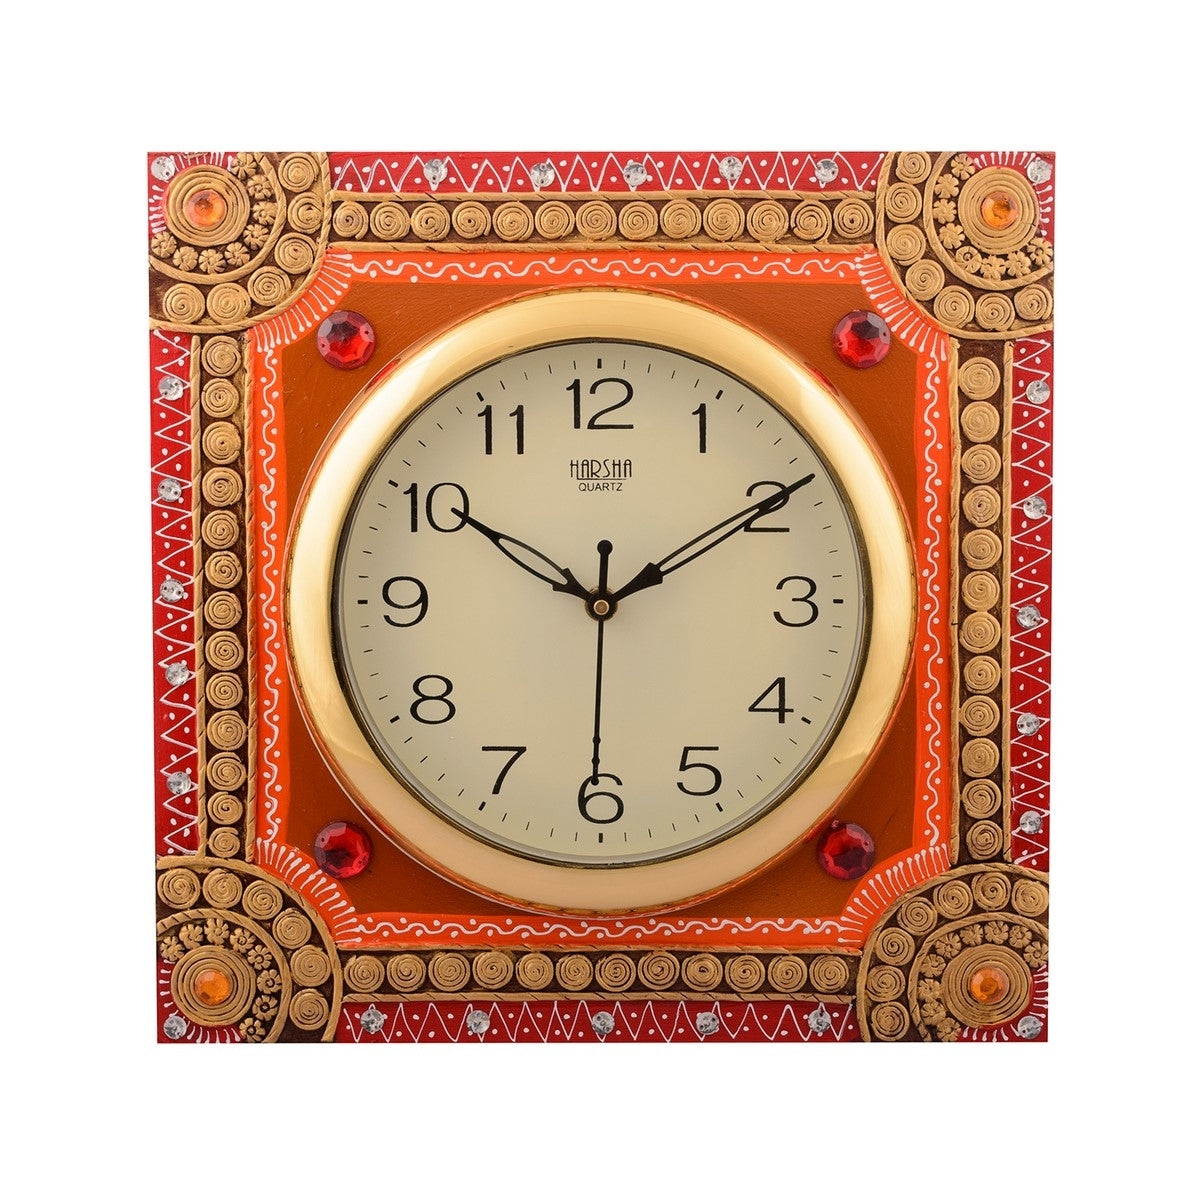 Wooden Papier Mache Elegant Artistic Handcrafted Wall Clock